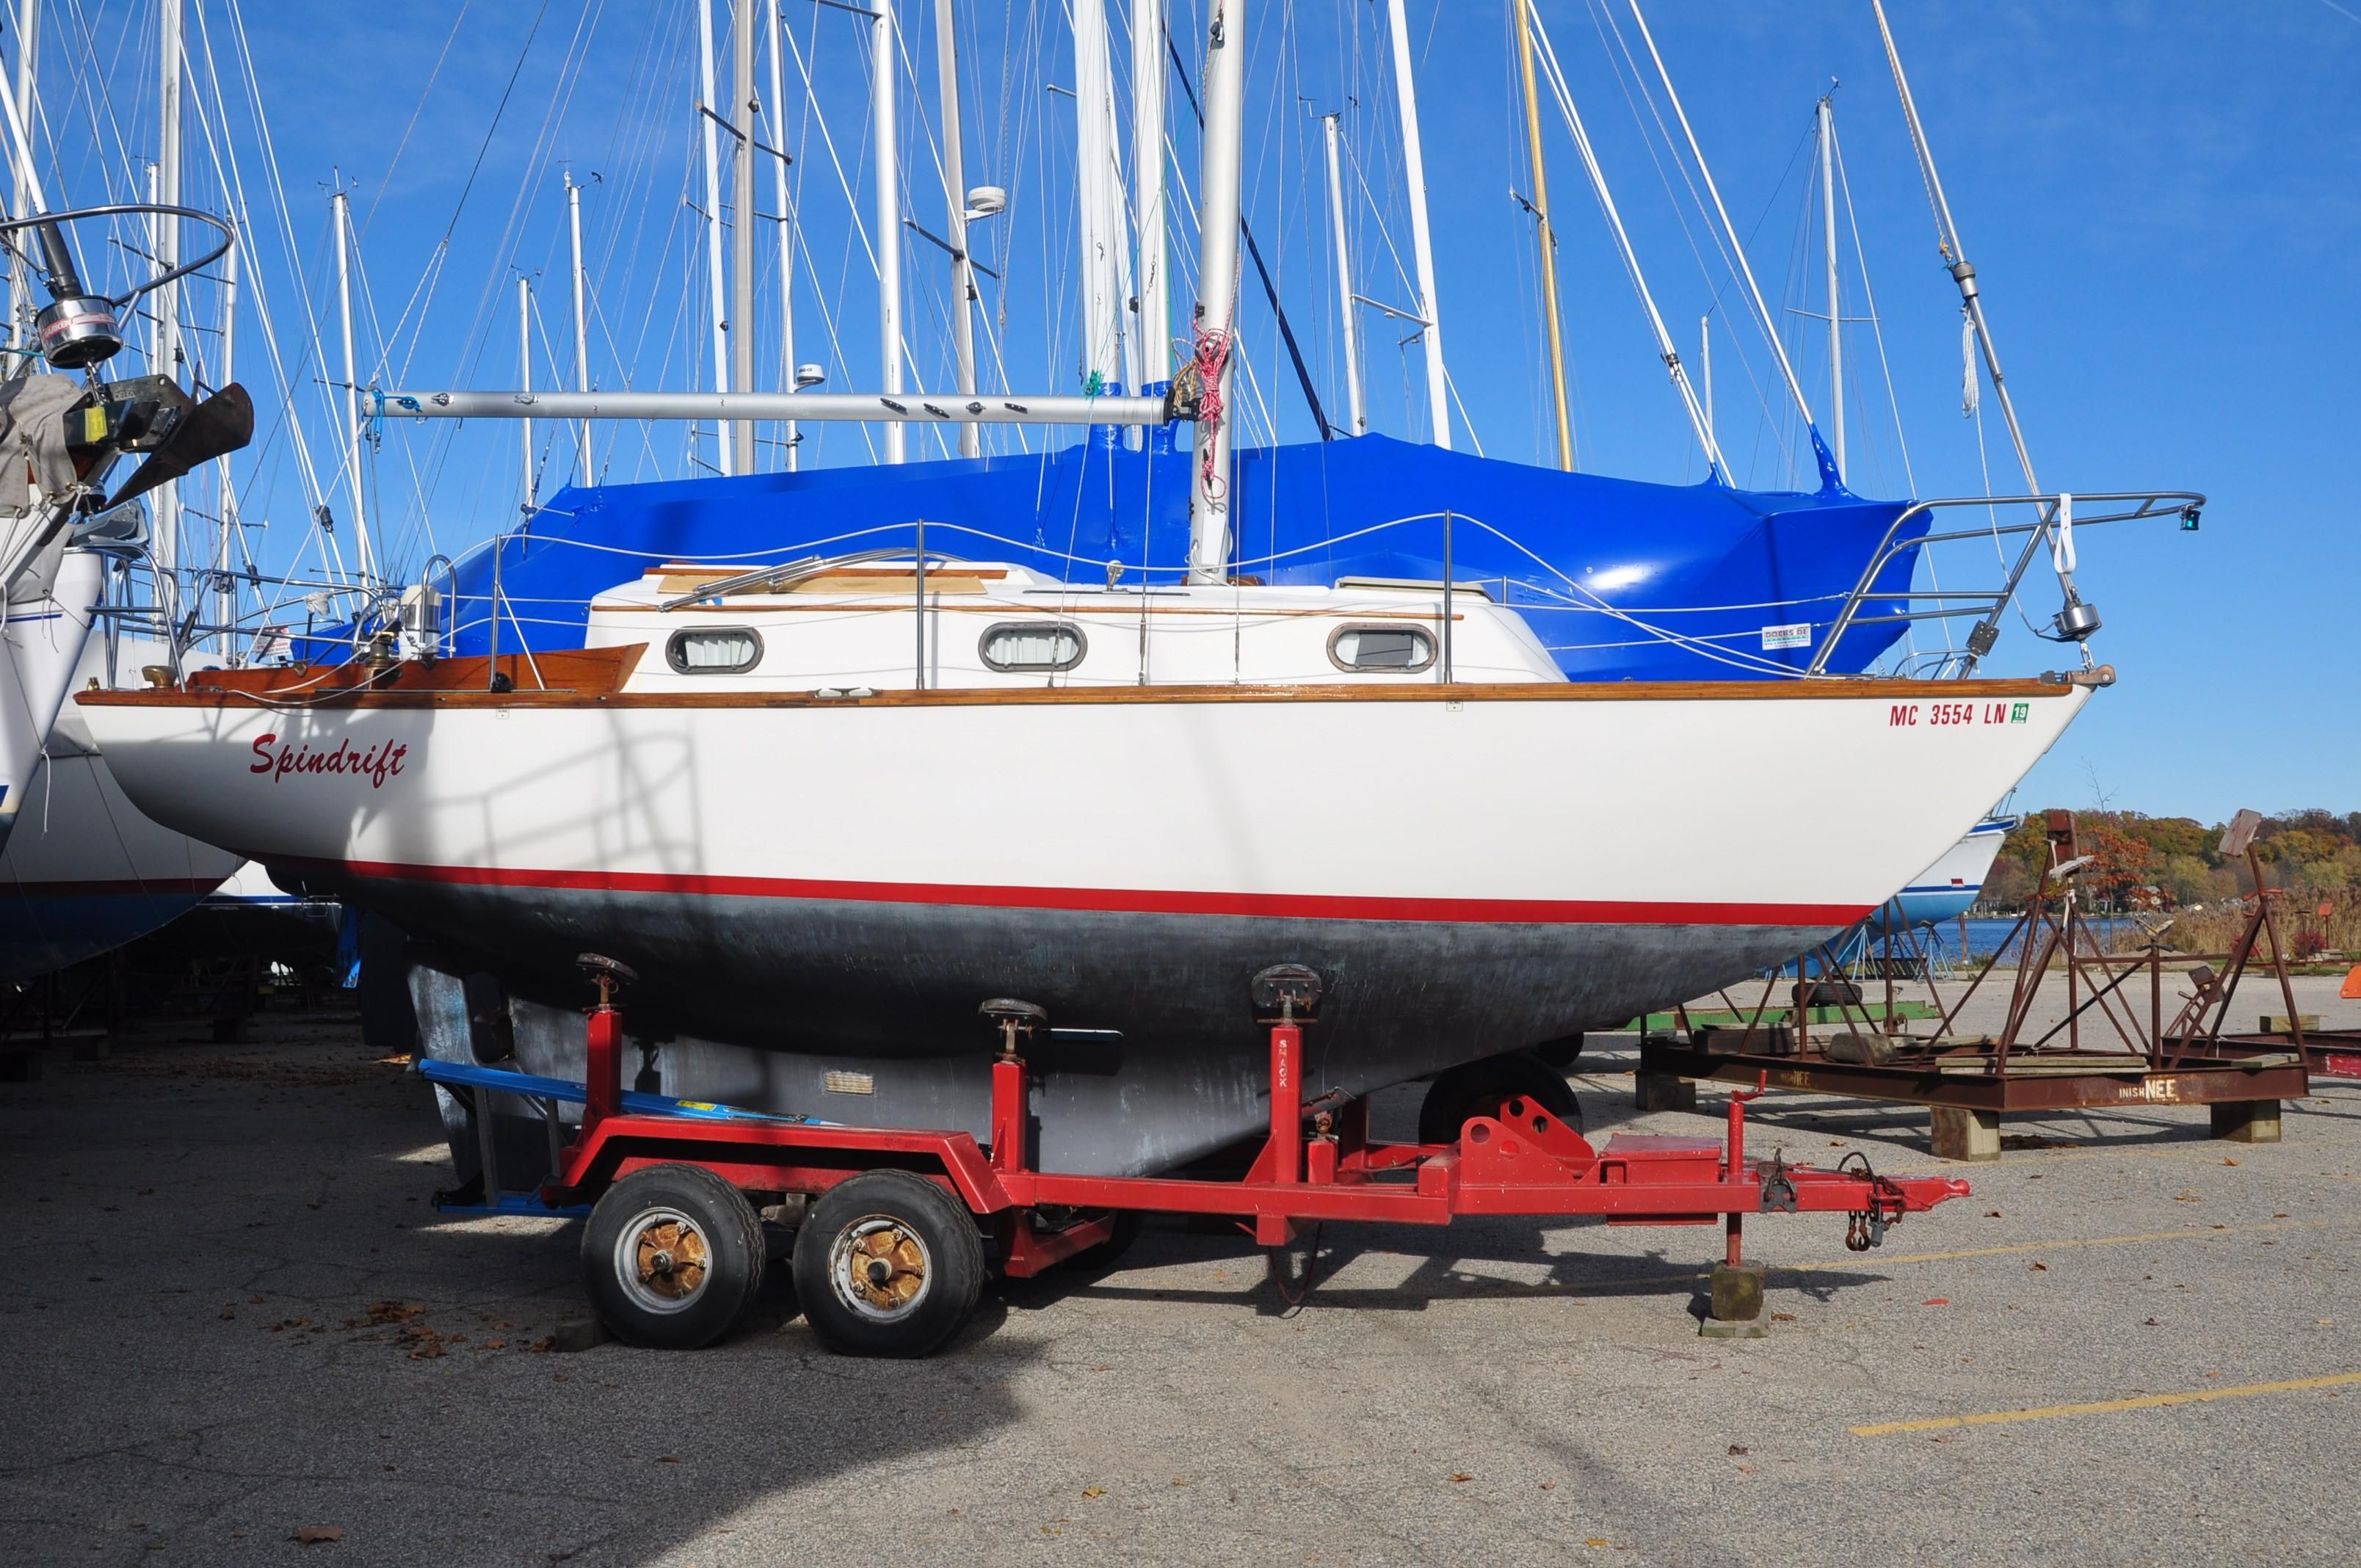 ranger 27 sailboat for sale